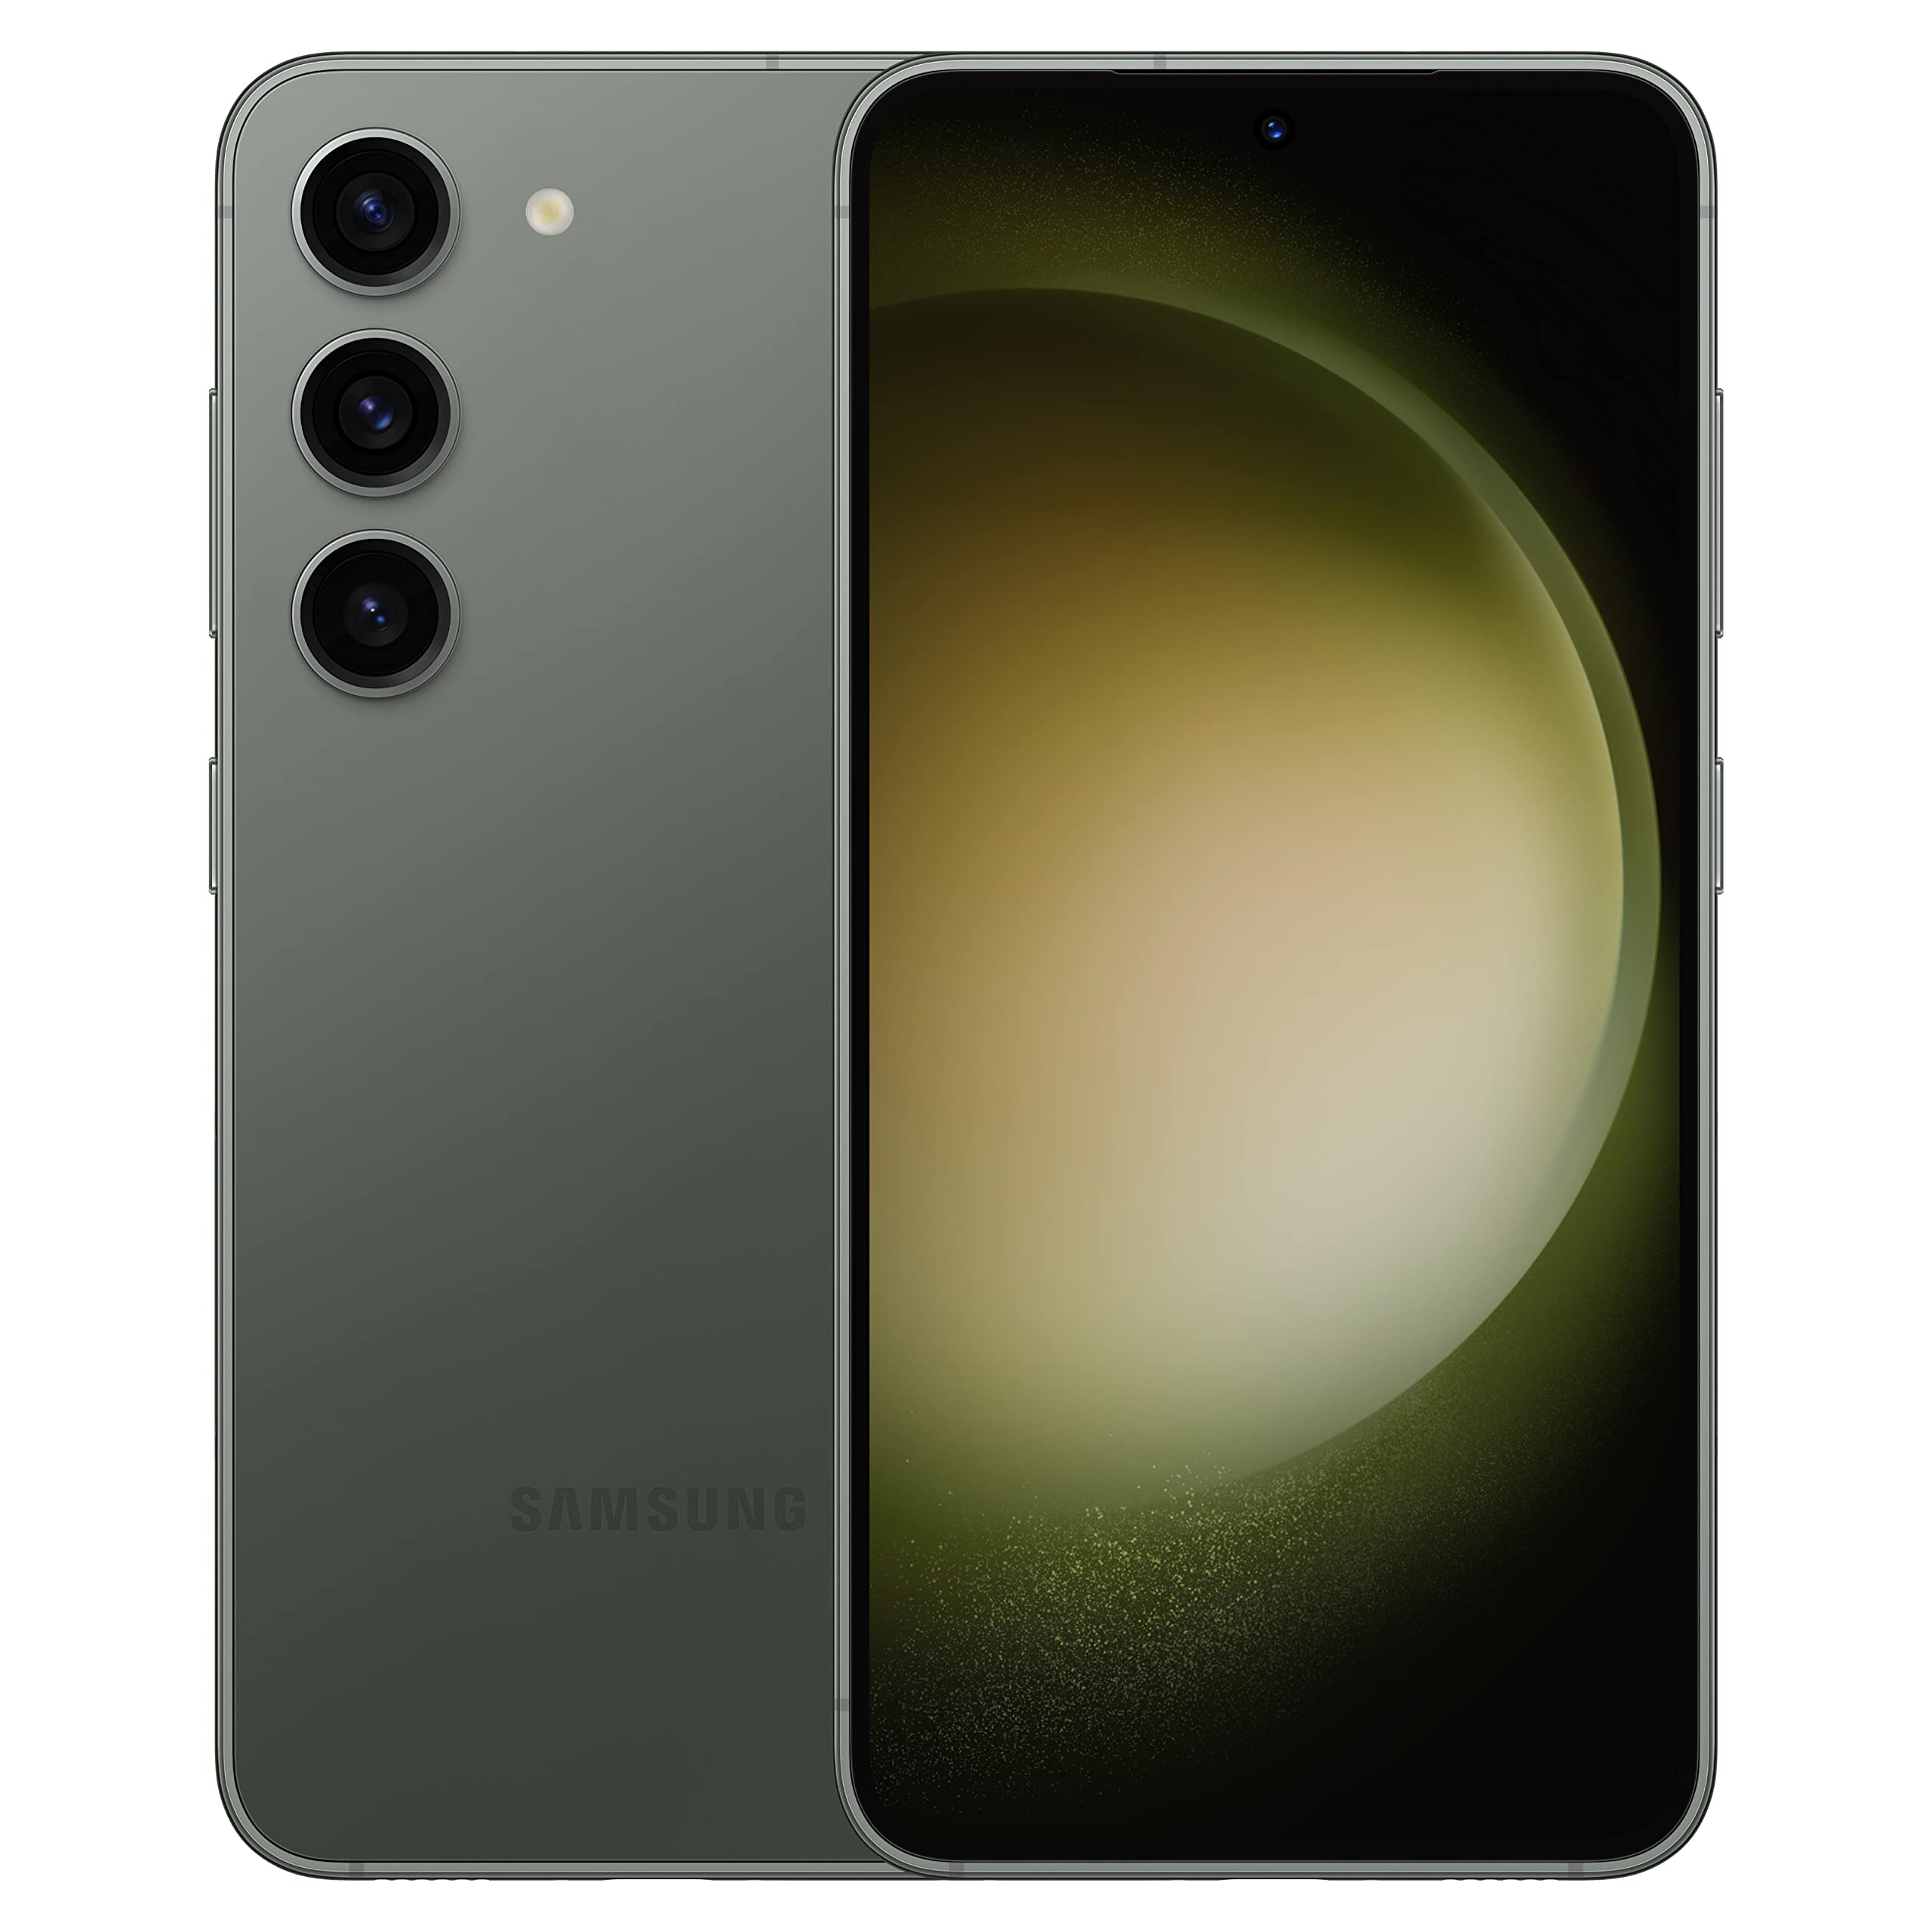 SAMSUNG Galaxy S23 Cell Phone, Factory Unlocked Android Smartphone, 256GB, 50MP Camera, Night Mode, Long Battery Life, Adaptive Display, US Version, 2023, Green